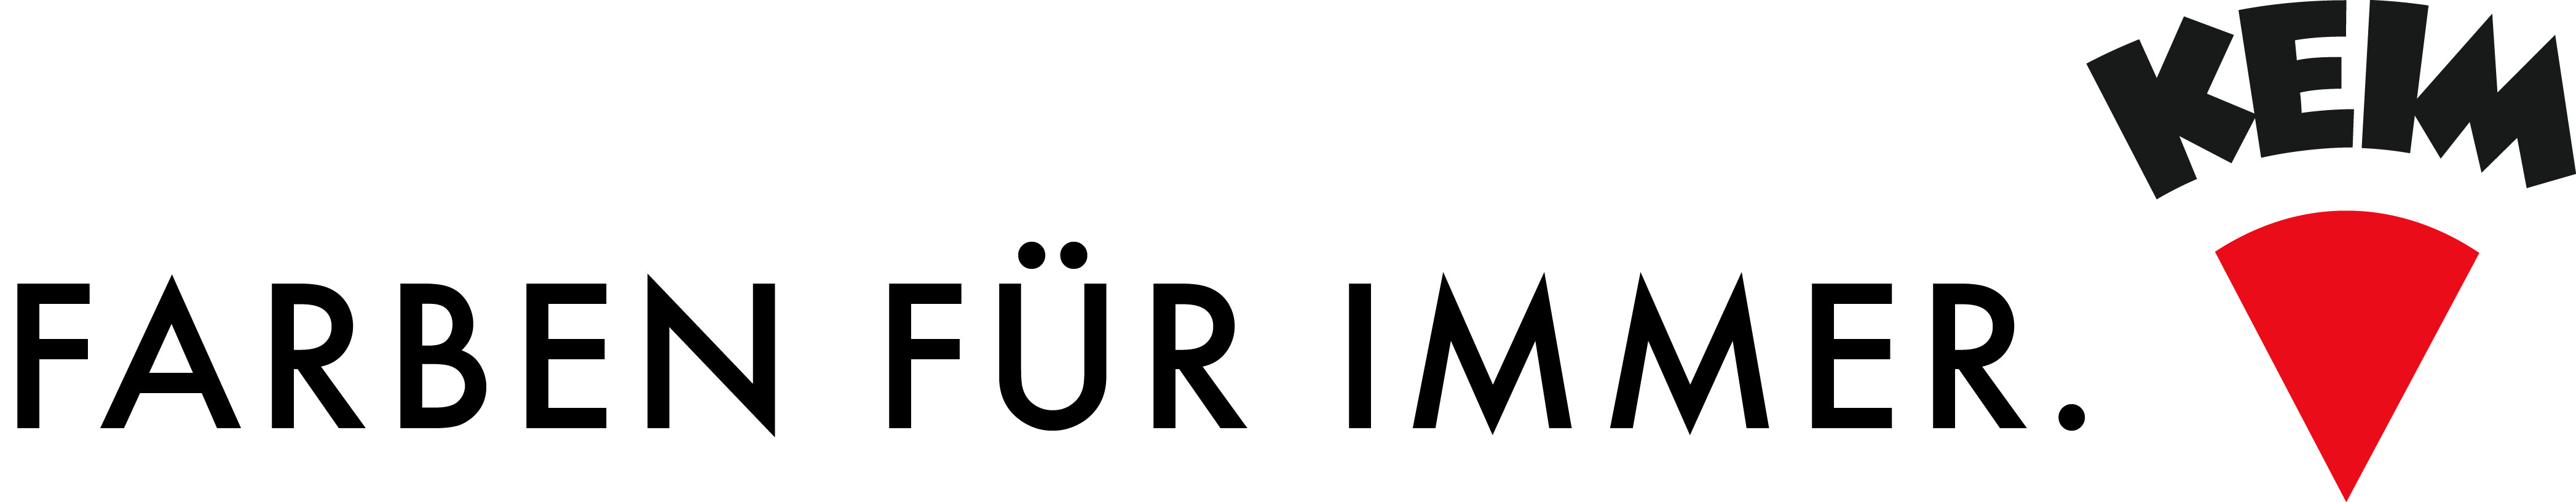 FARBEN FUR IMMER Logo